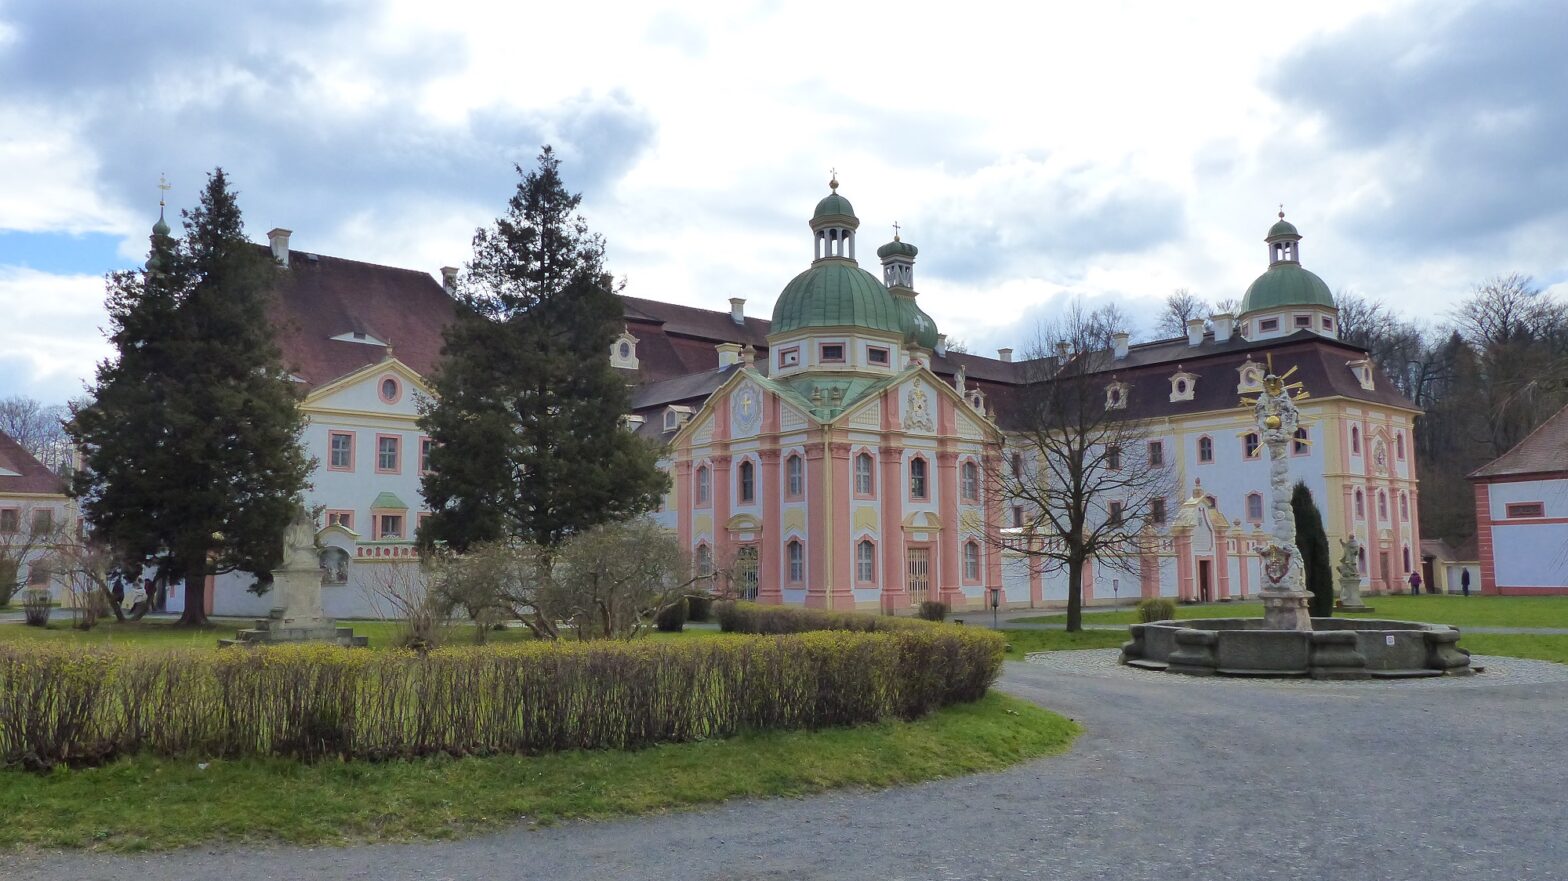 Kloster "St. Marienthal" in Ostritz - Foto: Dr. Bernd Gross, CC BY-SA 4.0